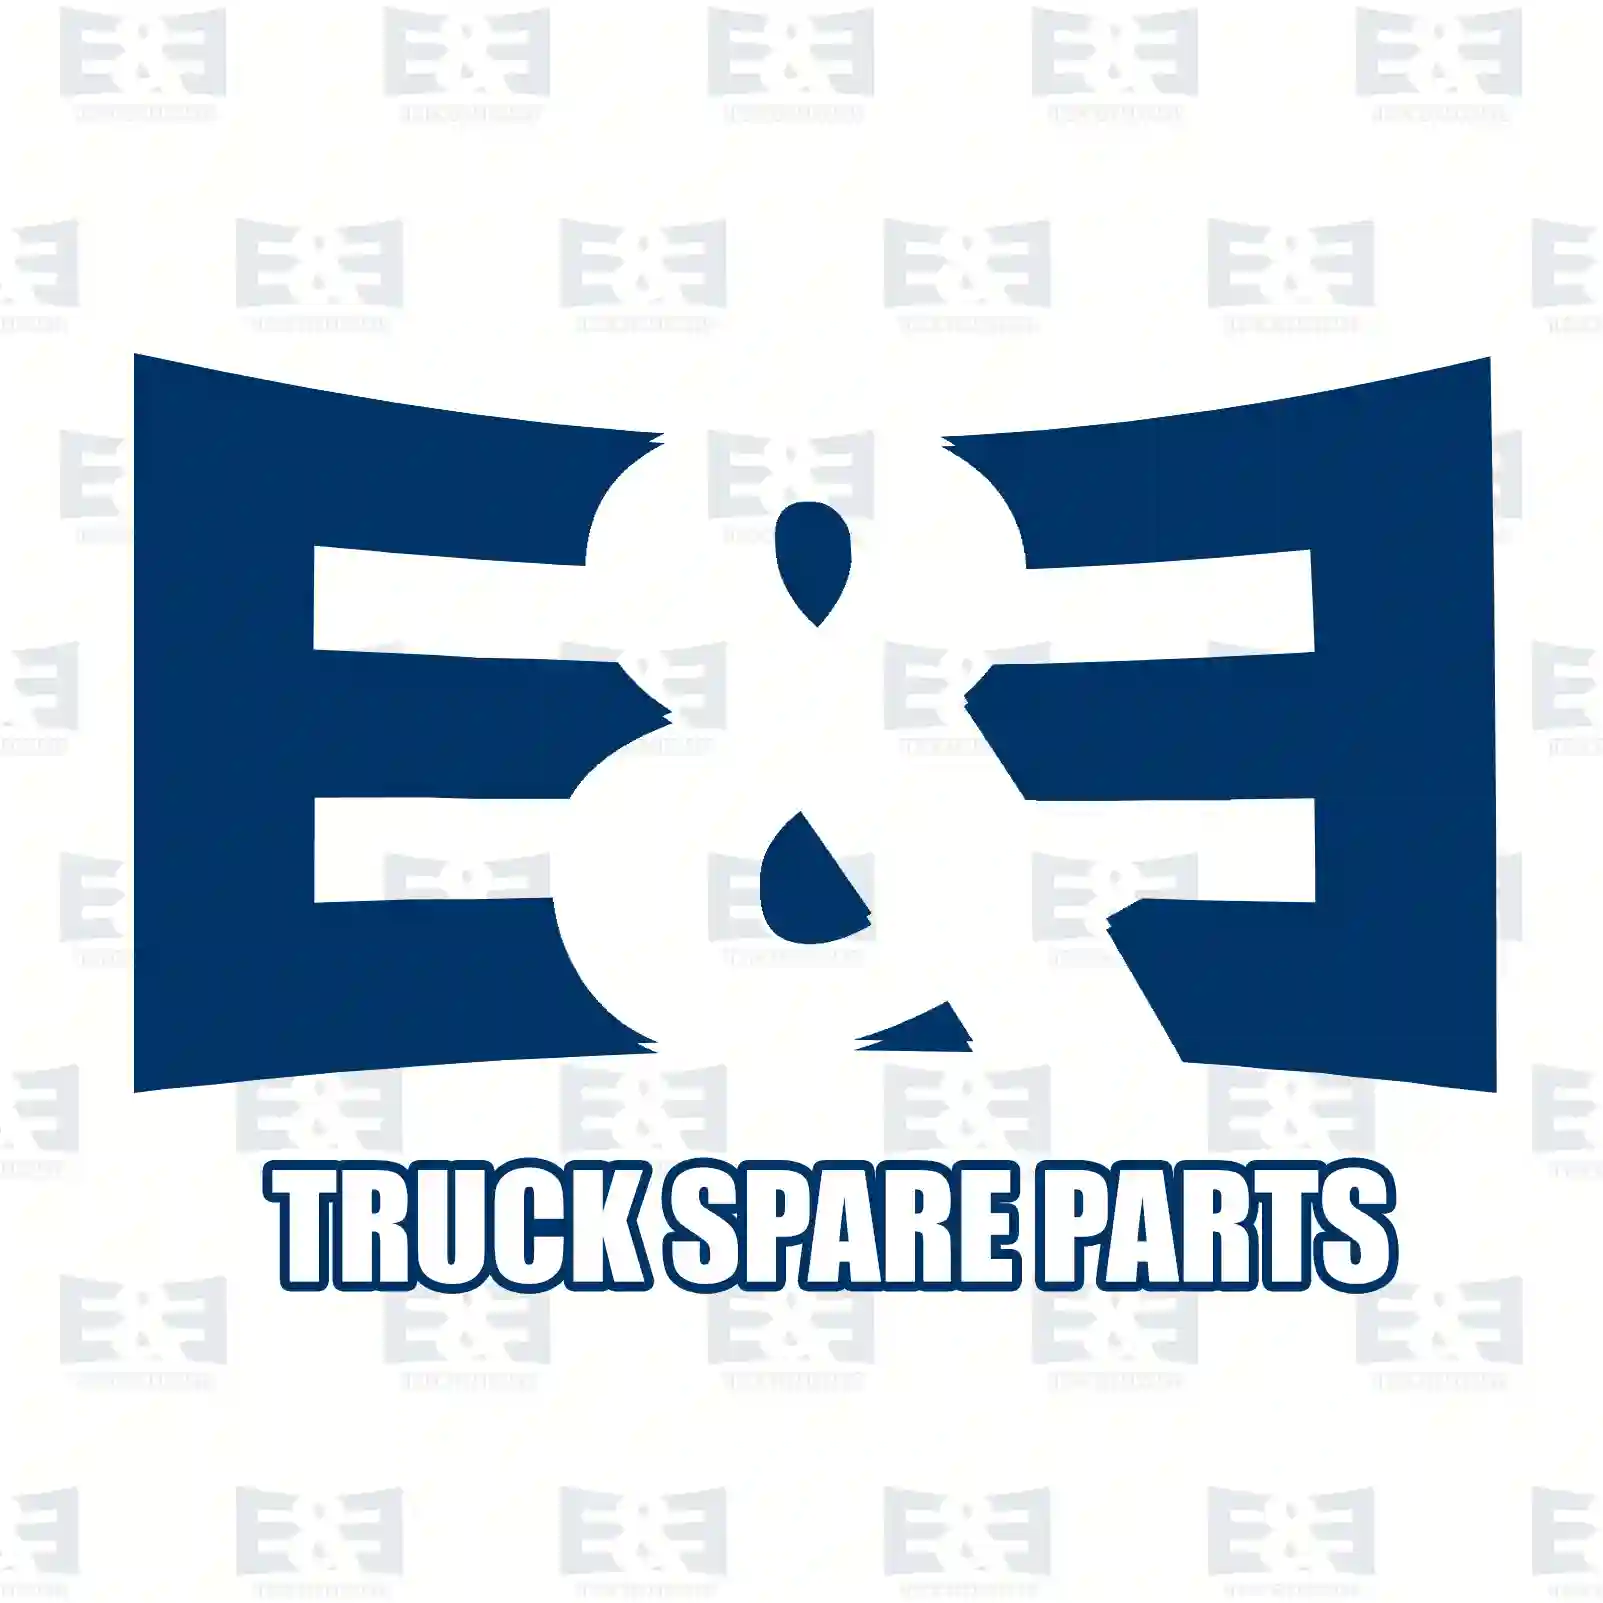 Engine mounting, 2E2207206, 504074159 ||  2E2207206 E&E Truck Spare Parts | Truck Spare Parts, Auotomotive Spare Parts Engine mounting, 2E2207206, 504074159 ||  2E2207206 E&E Truck Spare Parts | Truck Spare Parts, Auotomotive Spare Parts